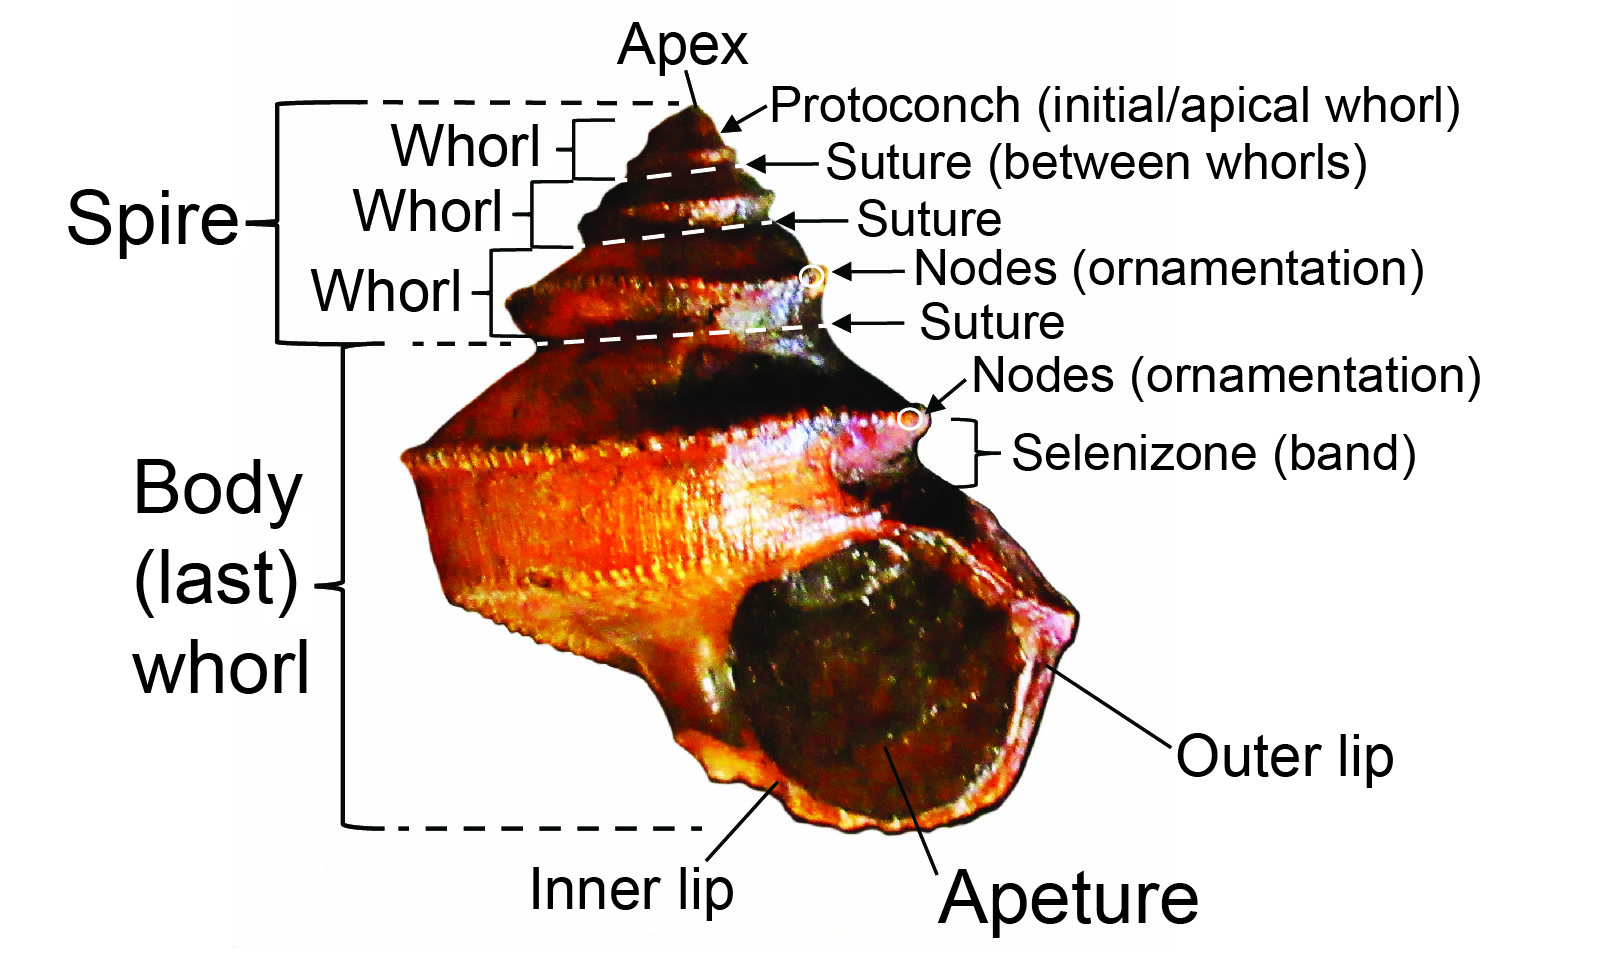 Figure 2: Descriptive terminology for Worthenia tabulata.